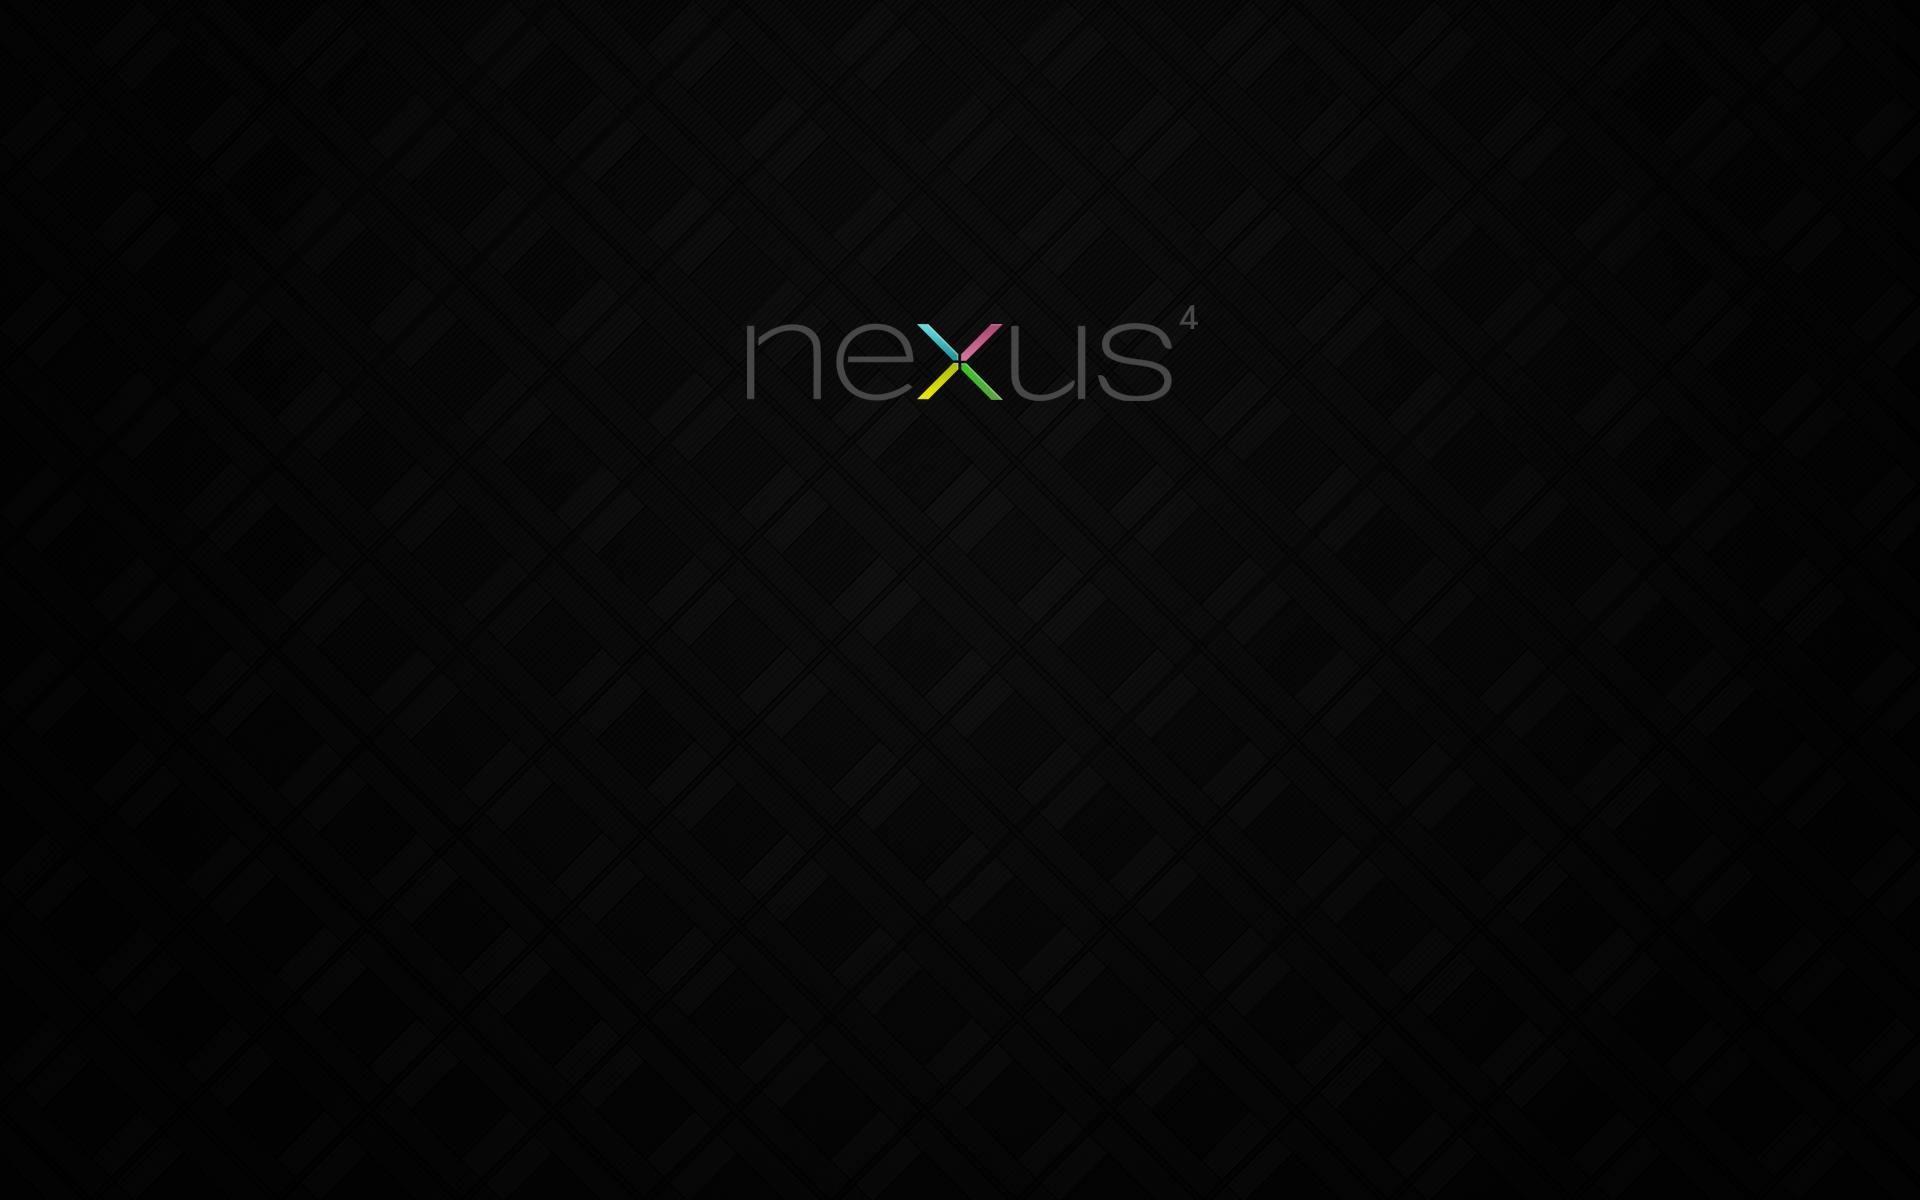 Nexus 7 (2012) home screen wallpaper | Android wallpaper, Hd wallpaper  android, Jelly wallpaper